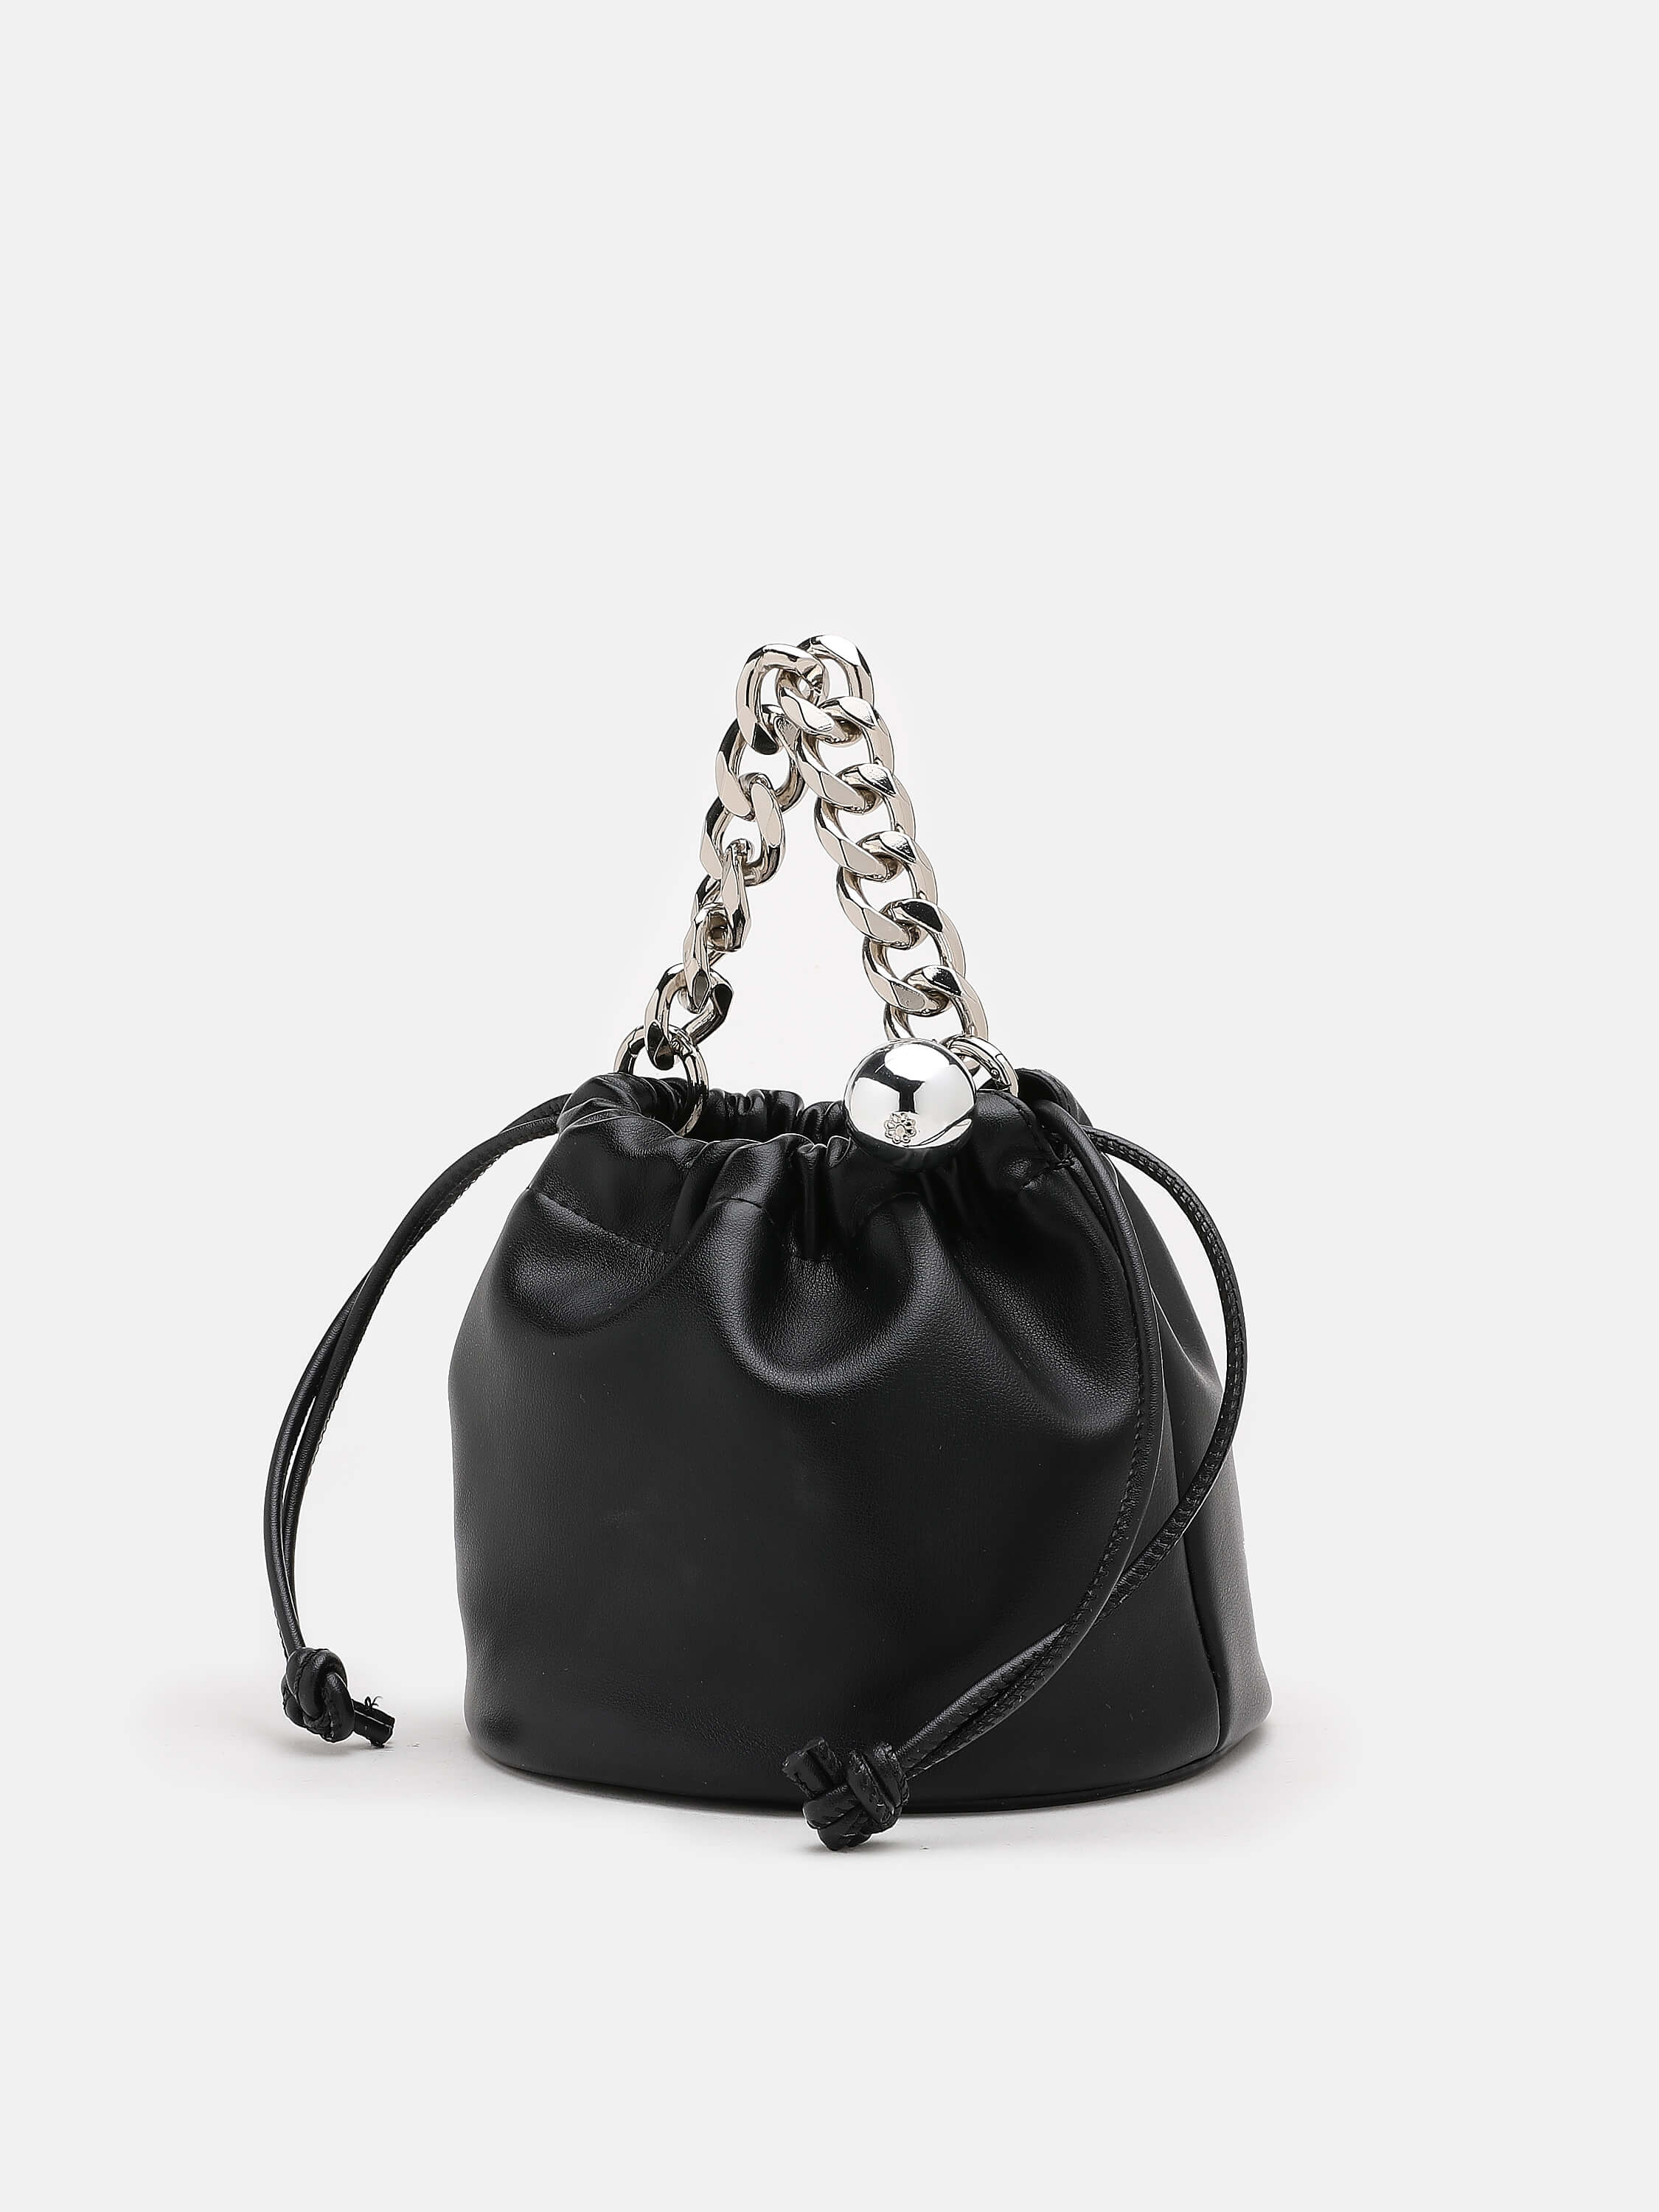 PAZZION, Mavrix Chained Bag, Black